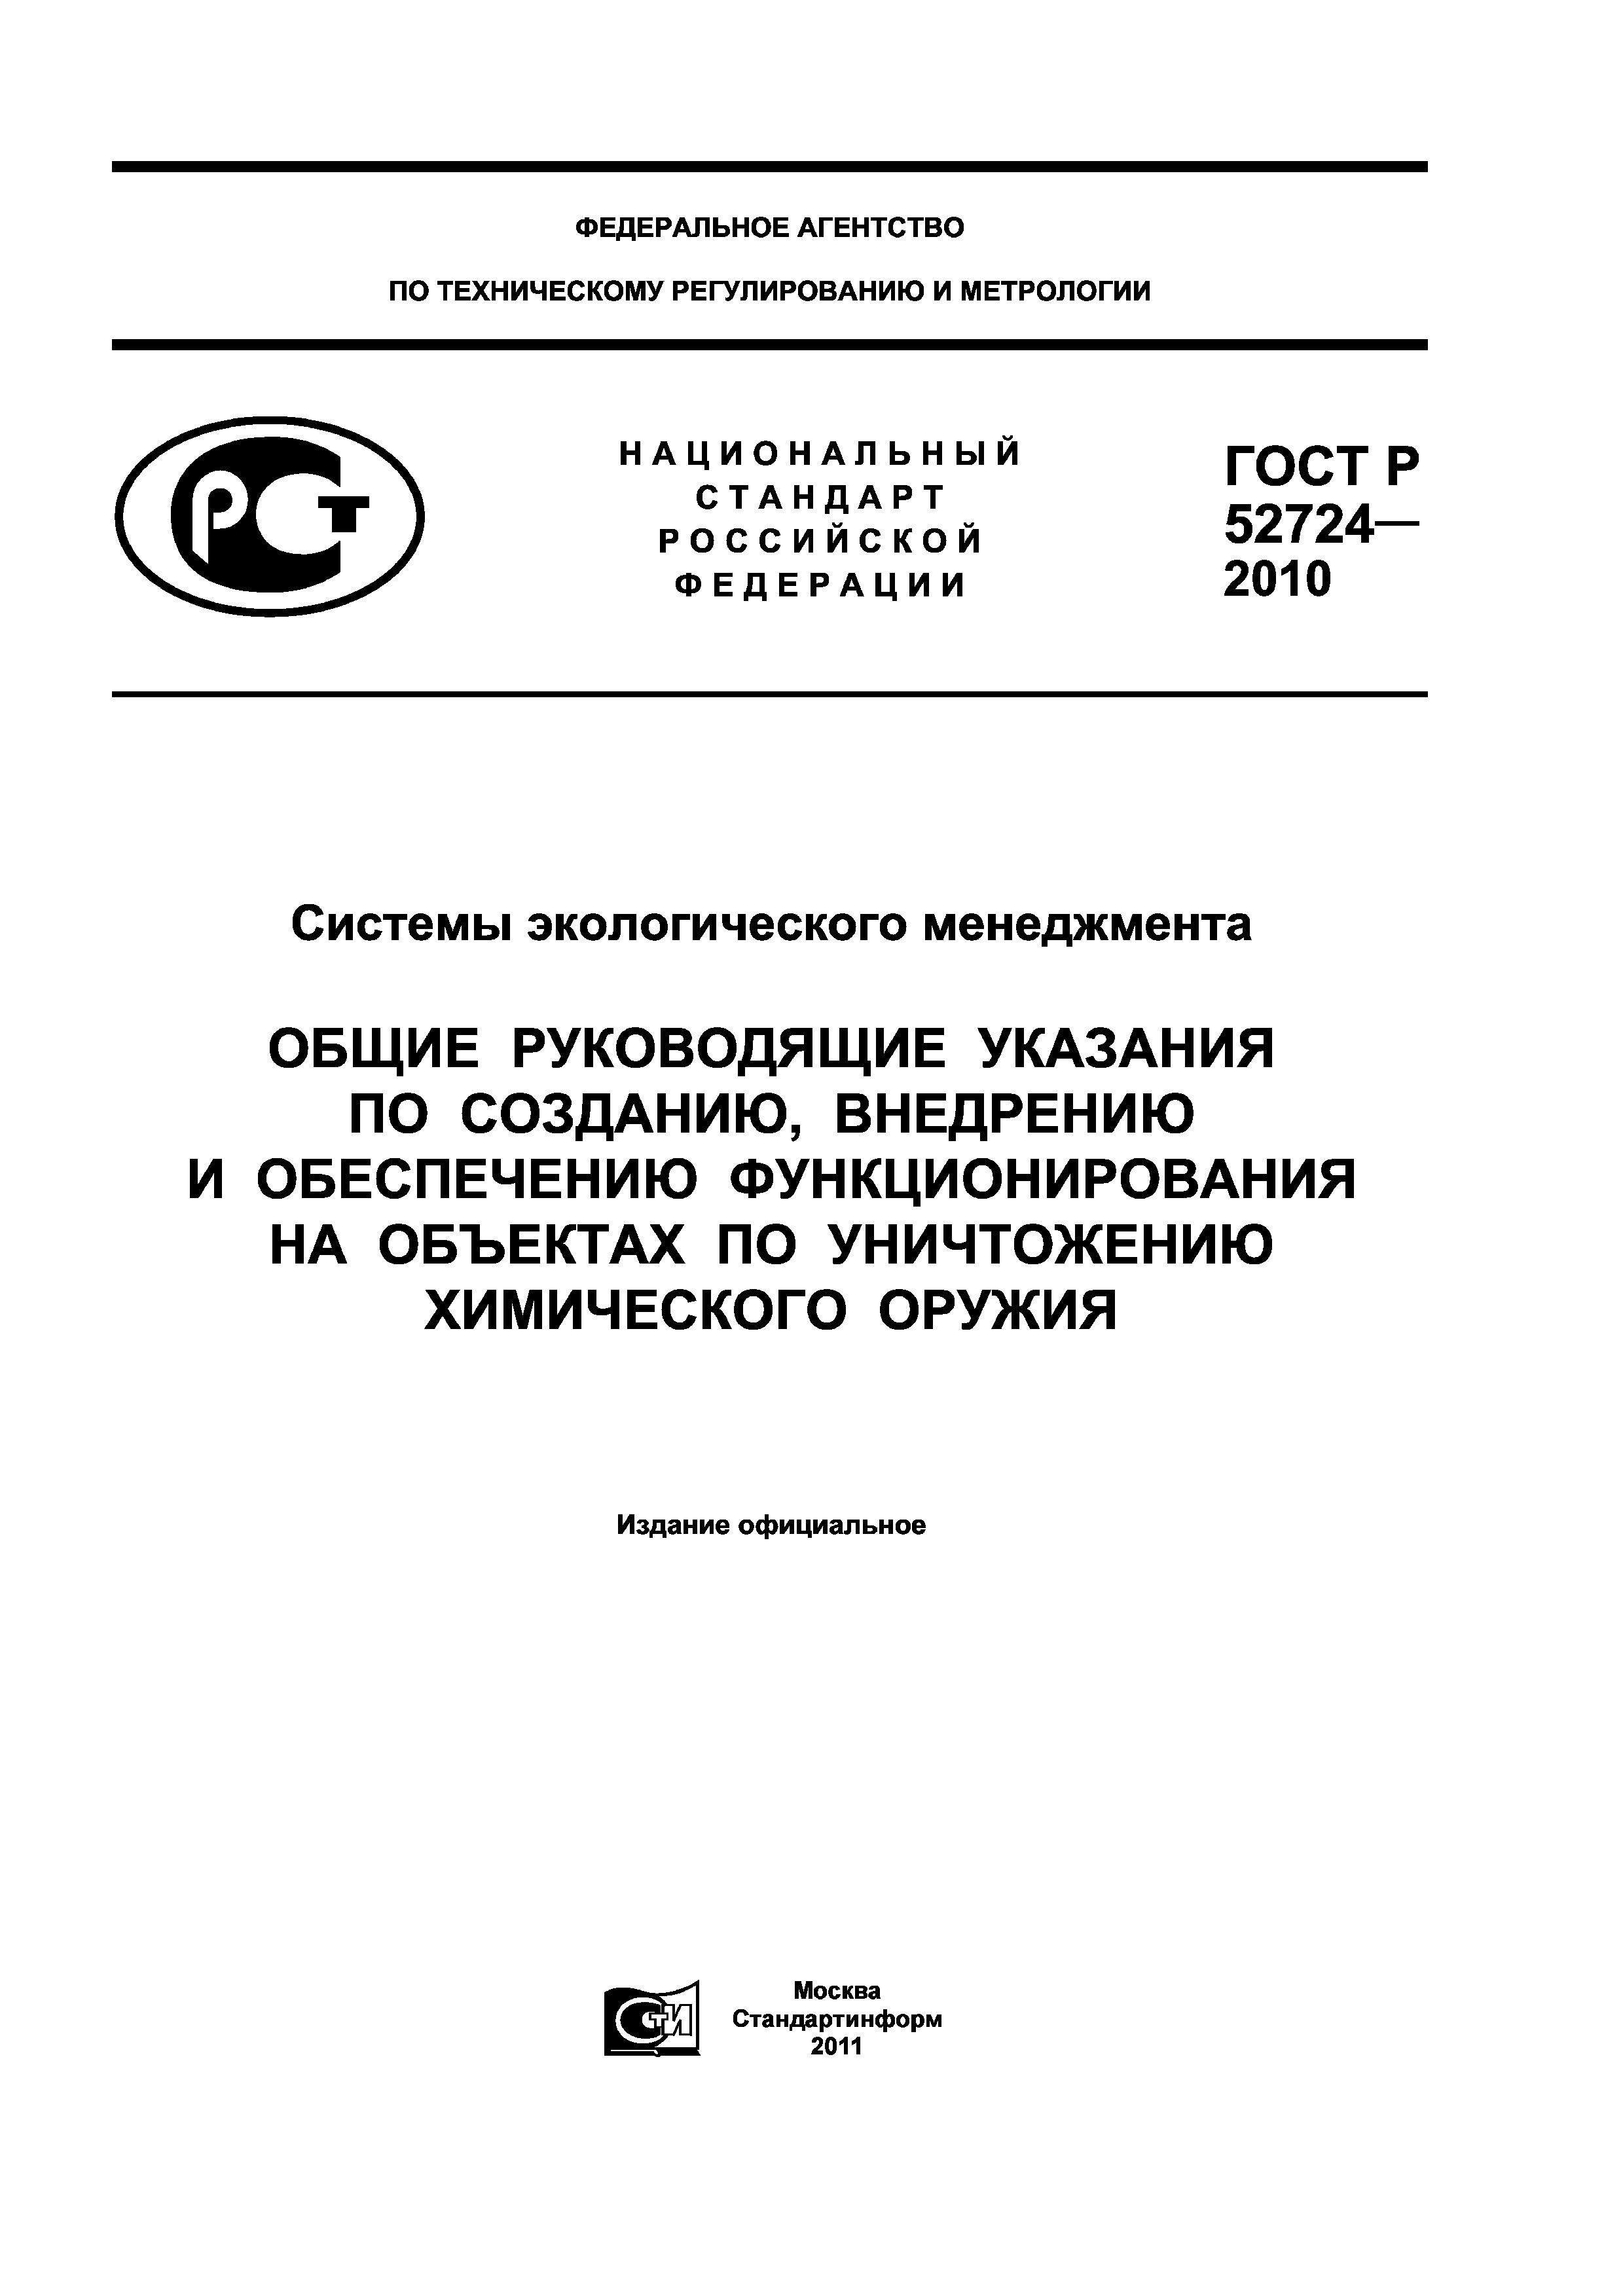 ГОСТ Р 52724-2010